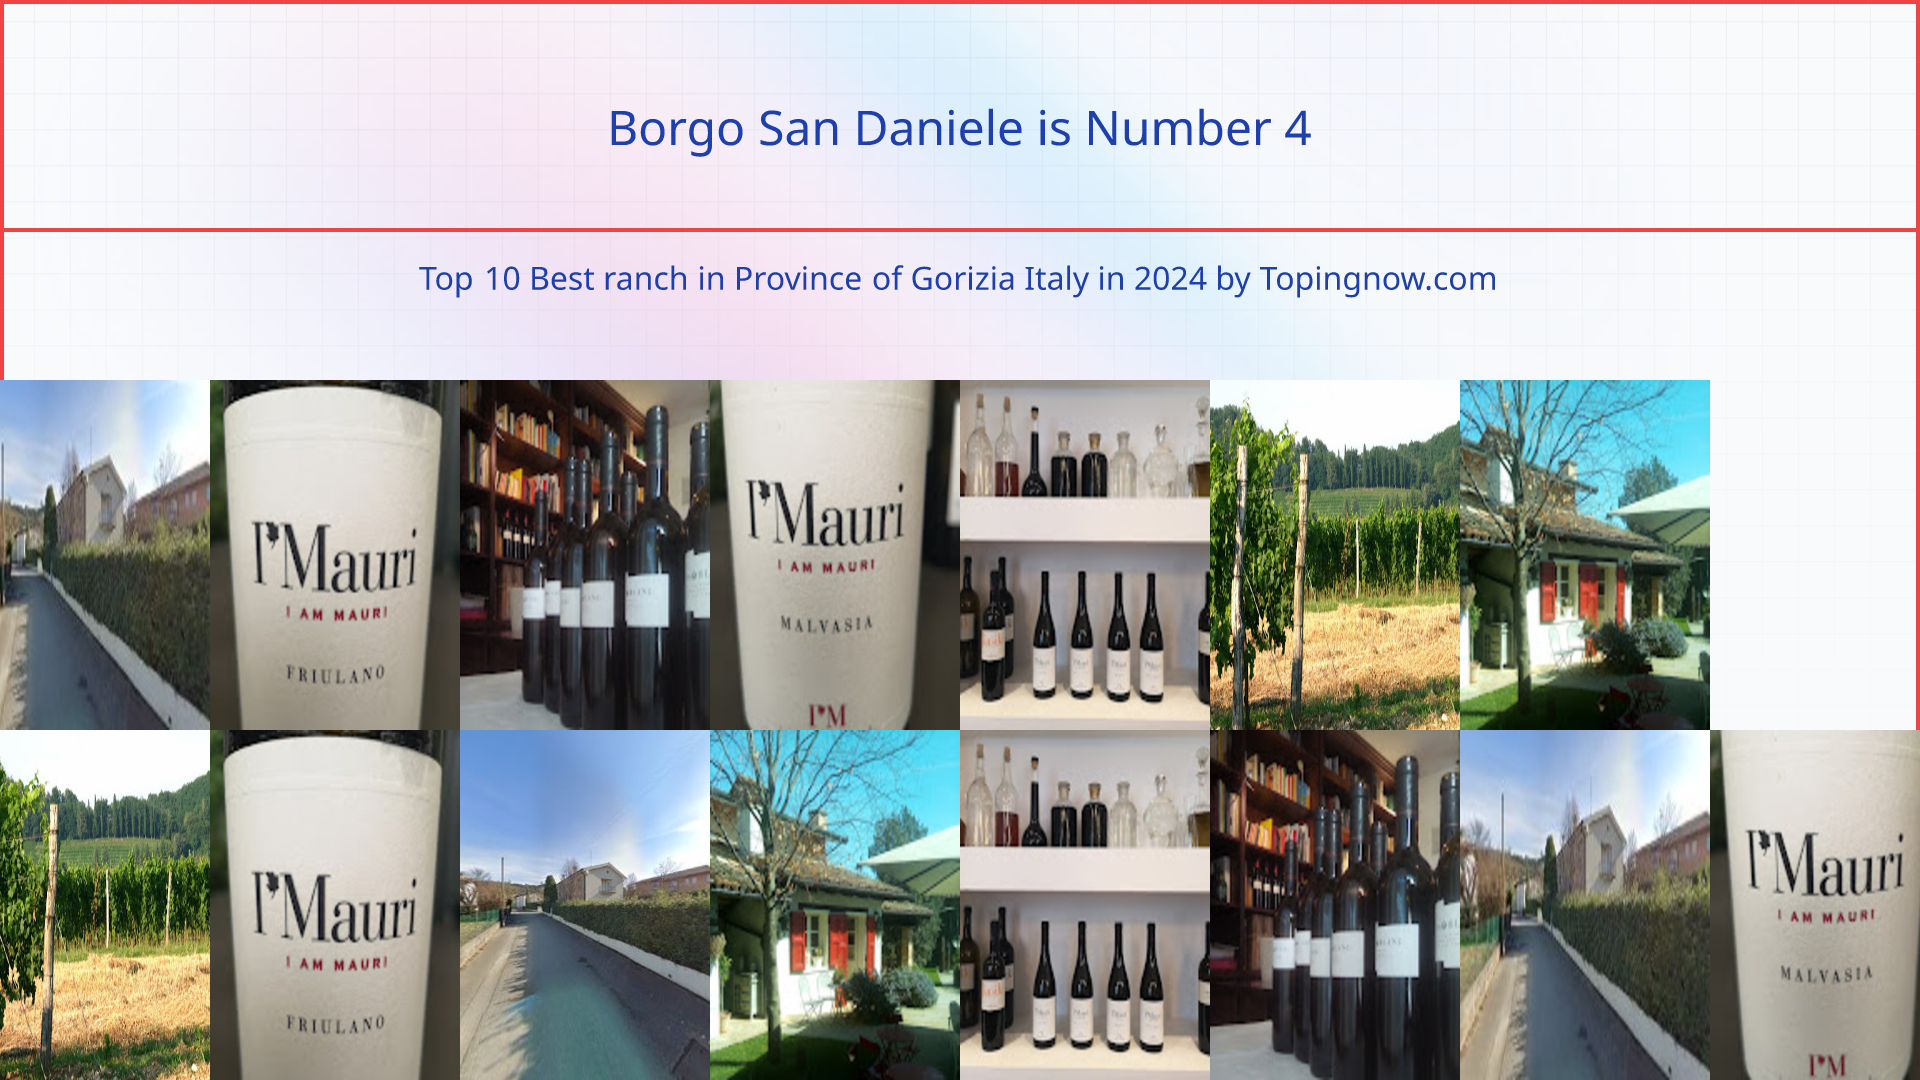 Borgo San Daniele: Top 10 Best ranch in Province of Gorizia Italy in 2024